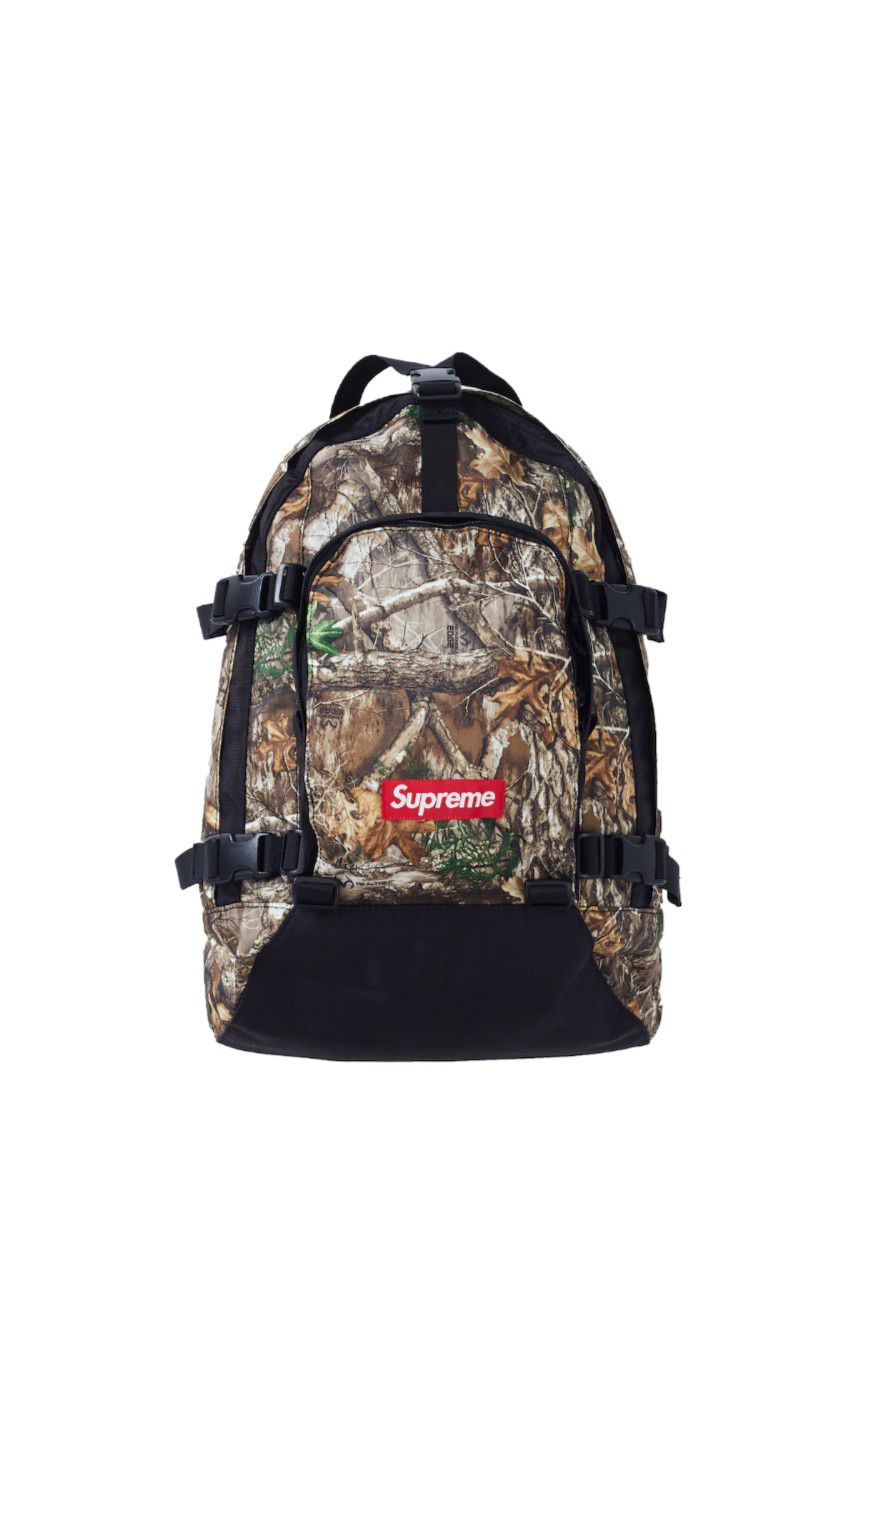 Supreme Realtree camo Backpack